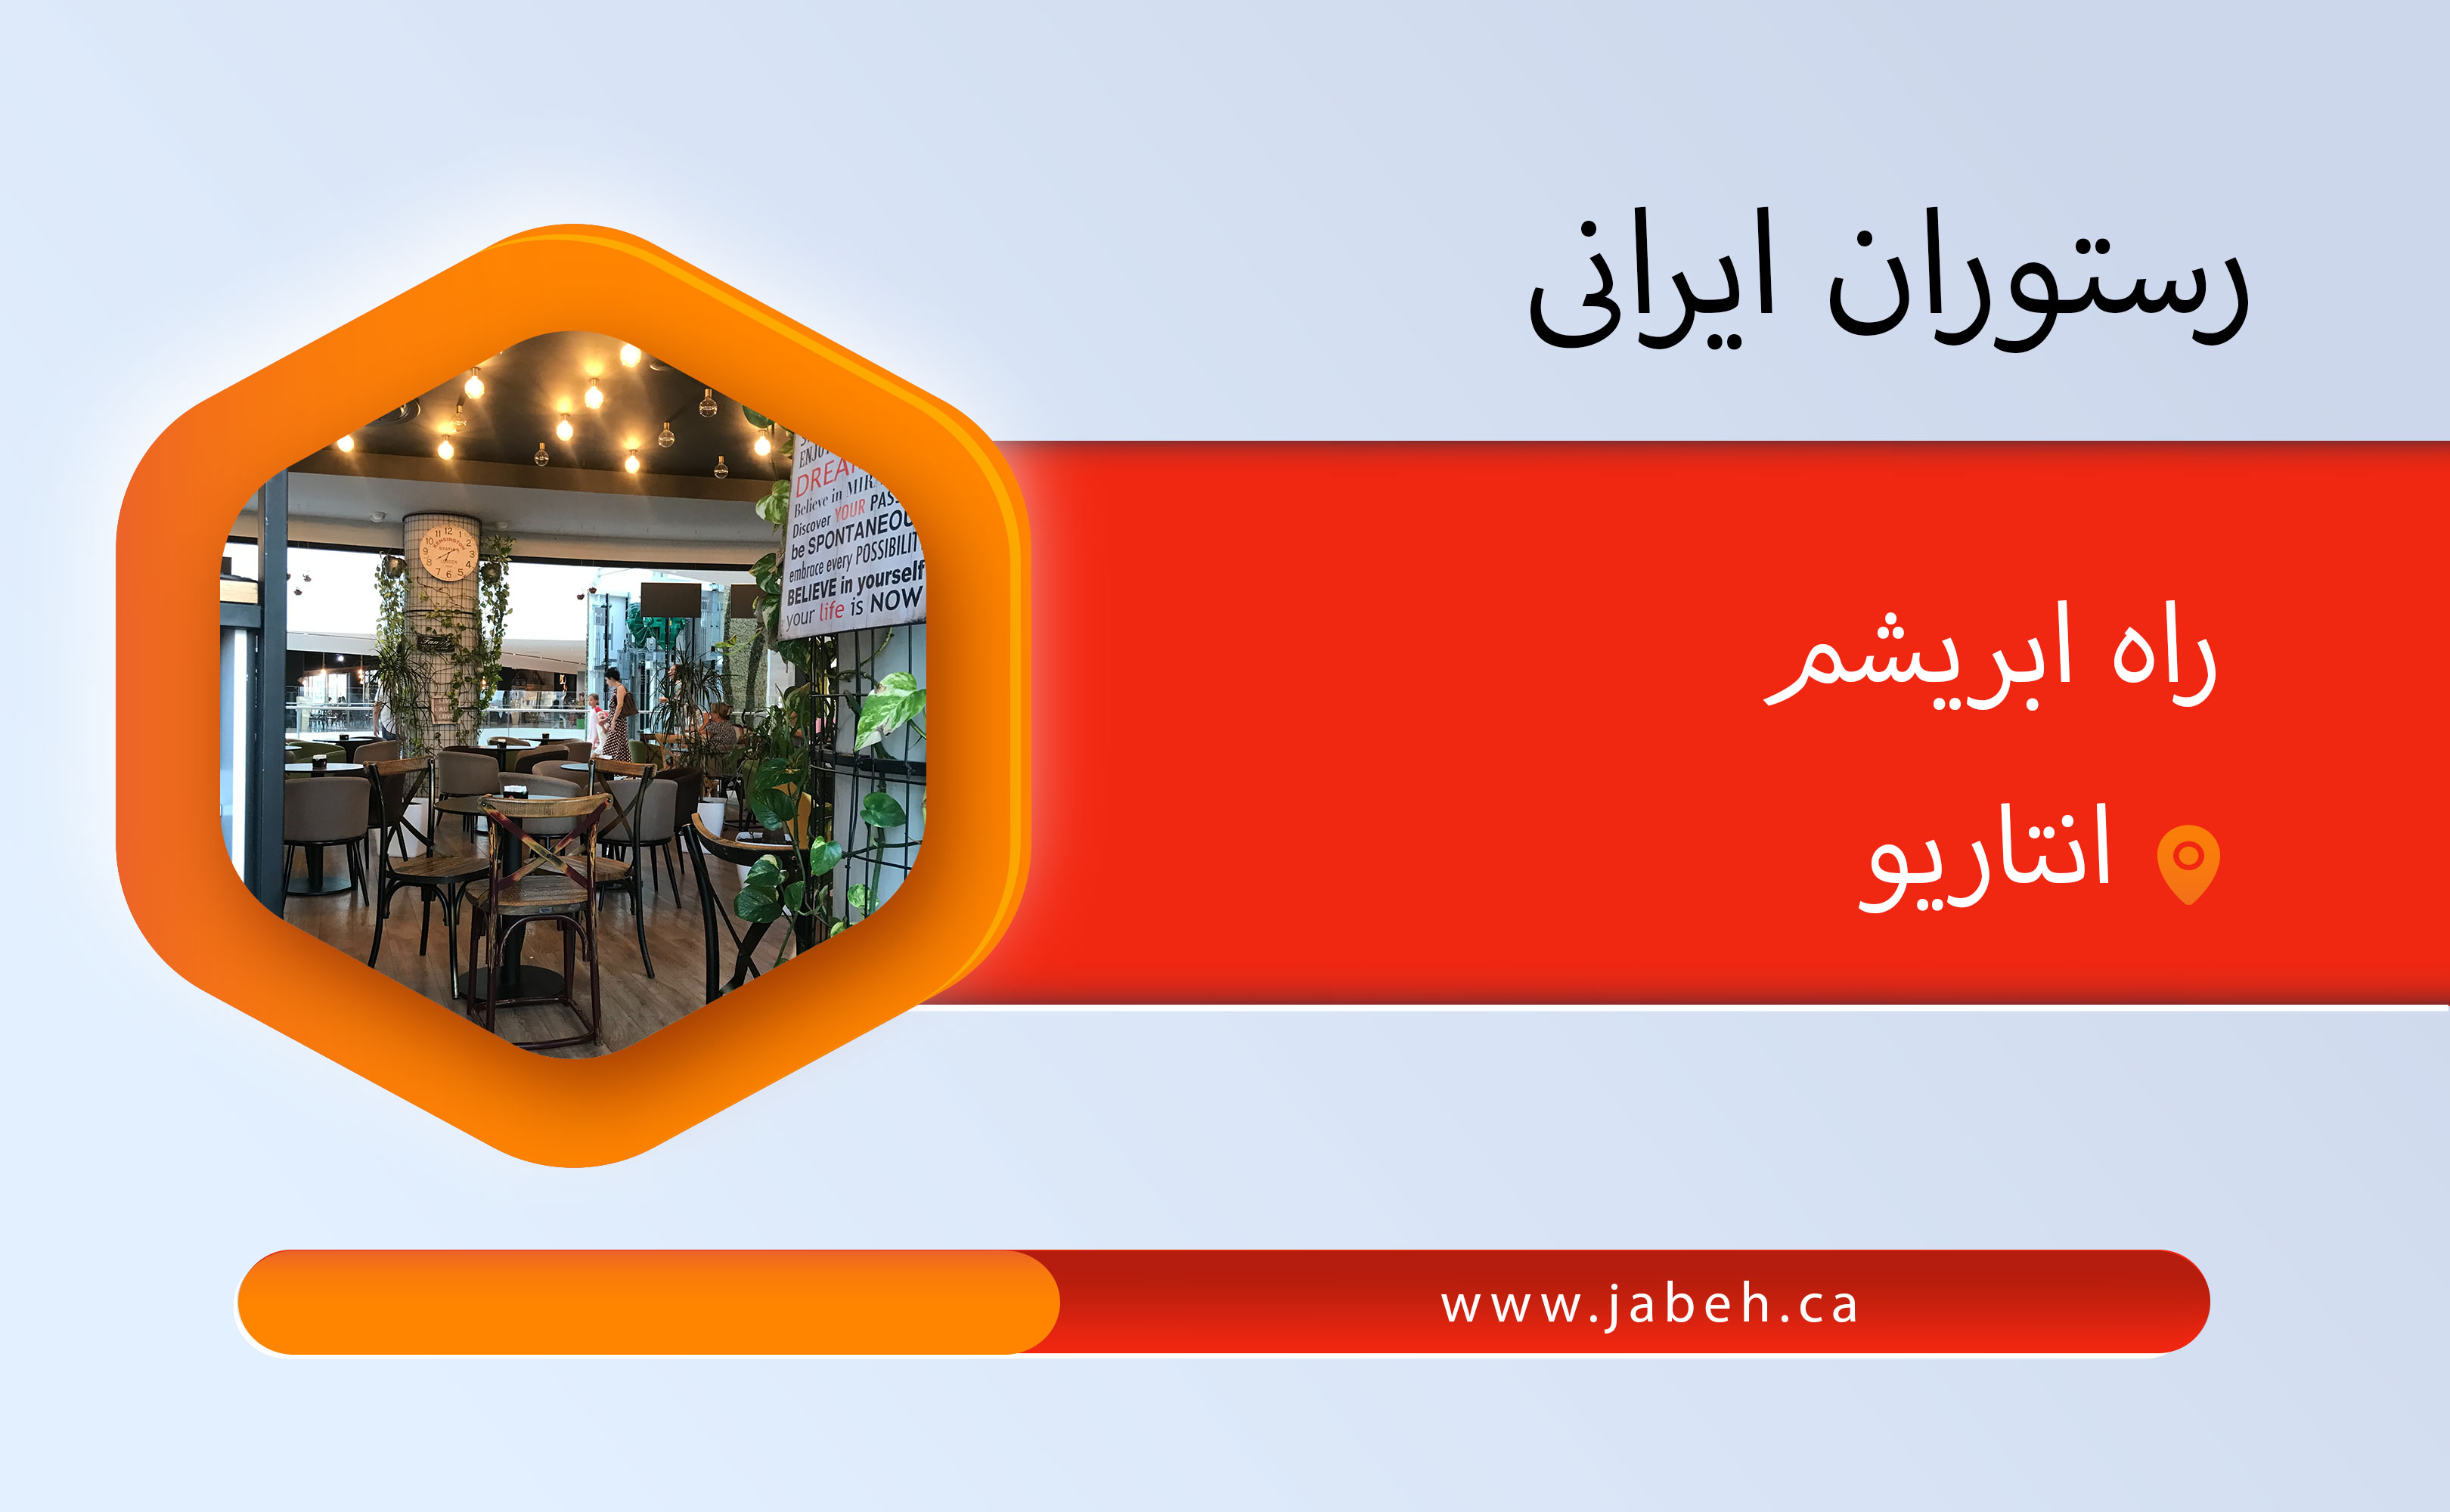 Silk Road Iranian Restaurant in Ontario